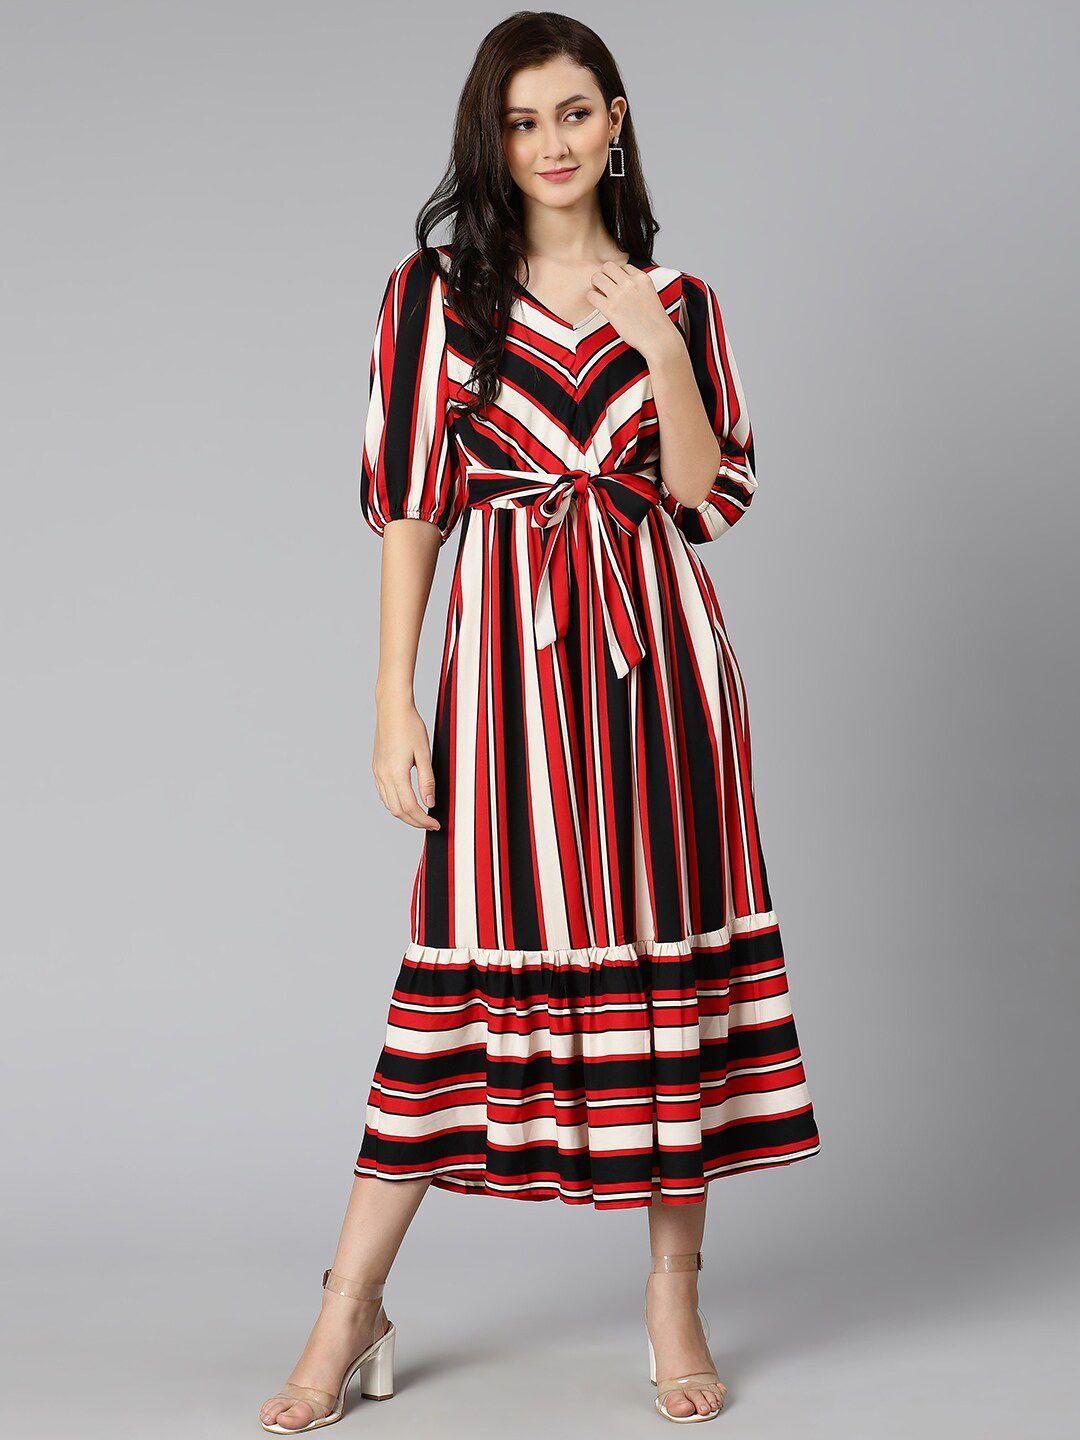 oxolloxo women red & black striped satin midi dress